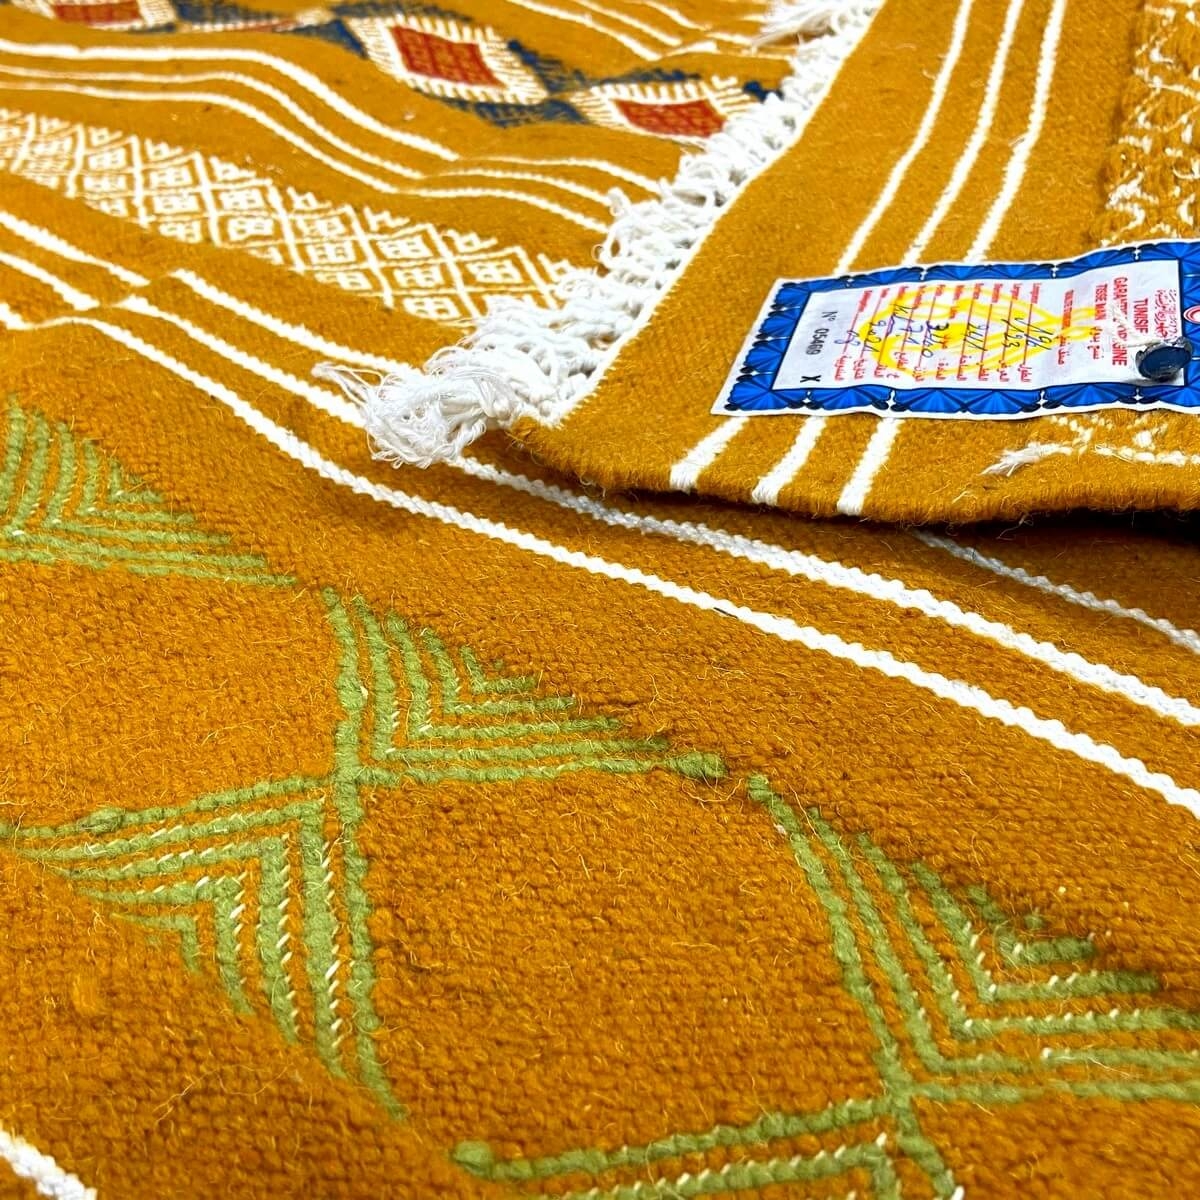 Berber carpet Rug Kilim Kadey 123x196 Yellow (Handmade, Wool) Tunisian Rug Kilim style Moroccan rug. Rectangular carpet 100% woo